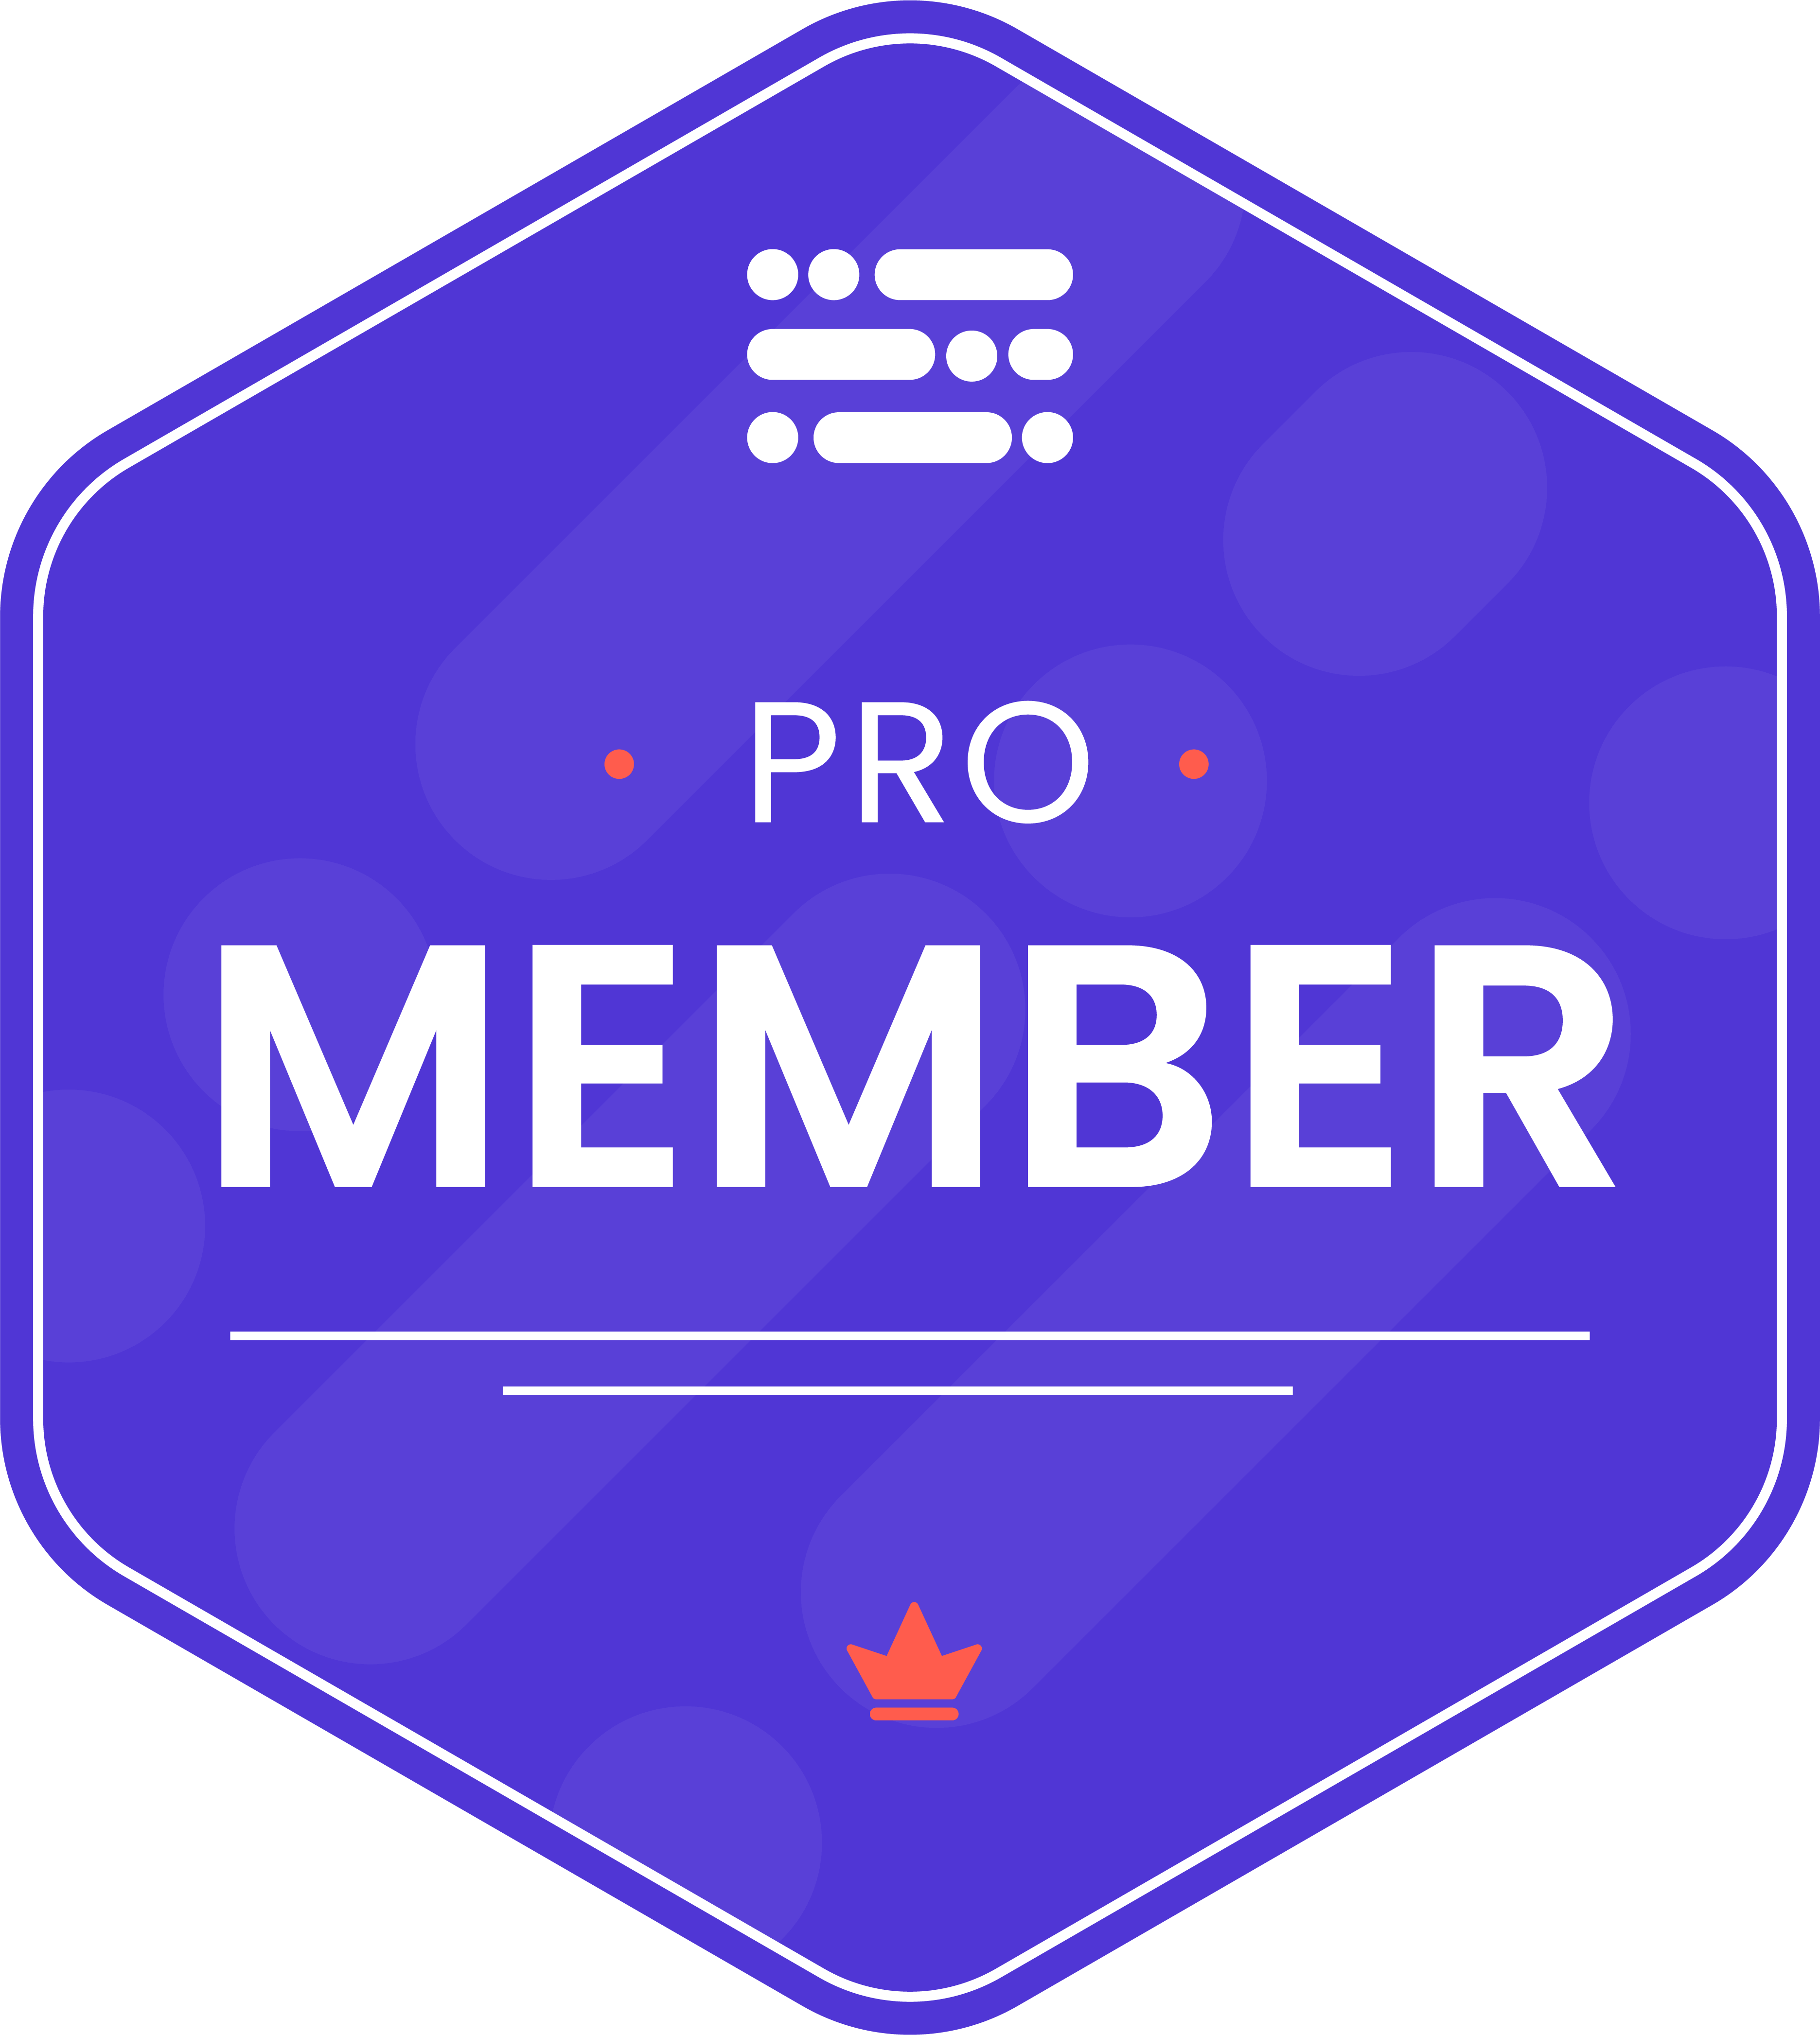 Developer marketing alliance pro membership badge